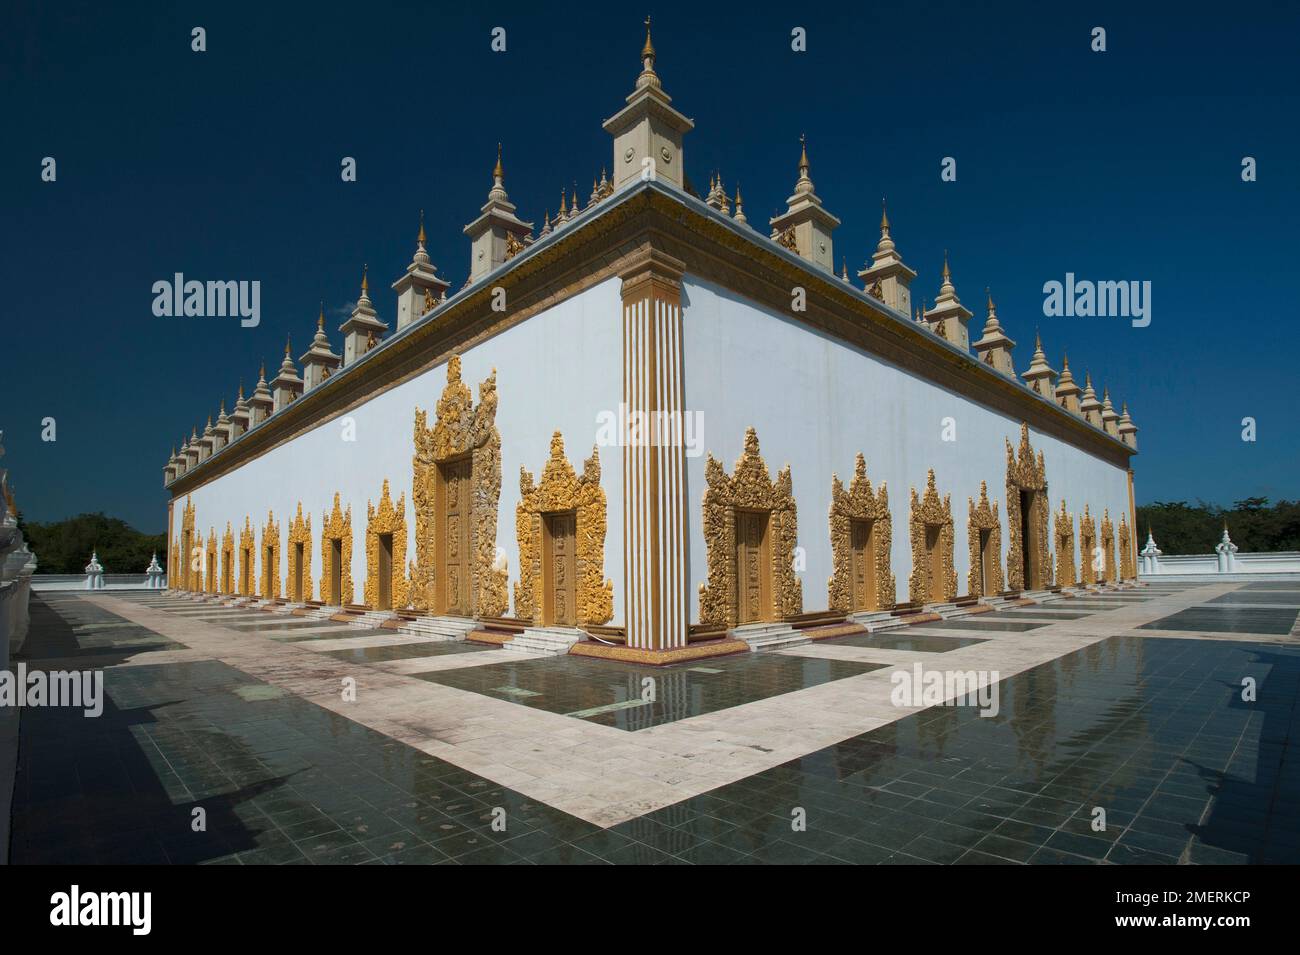 Myanmar, Mandalay, Atumashi Kyaung Stockfoto